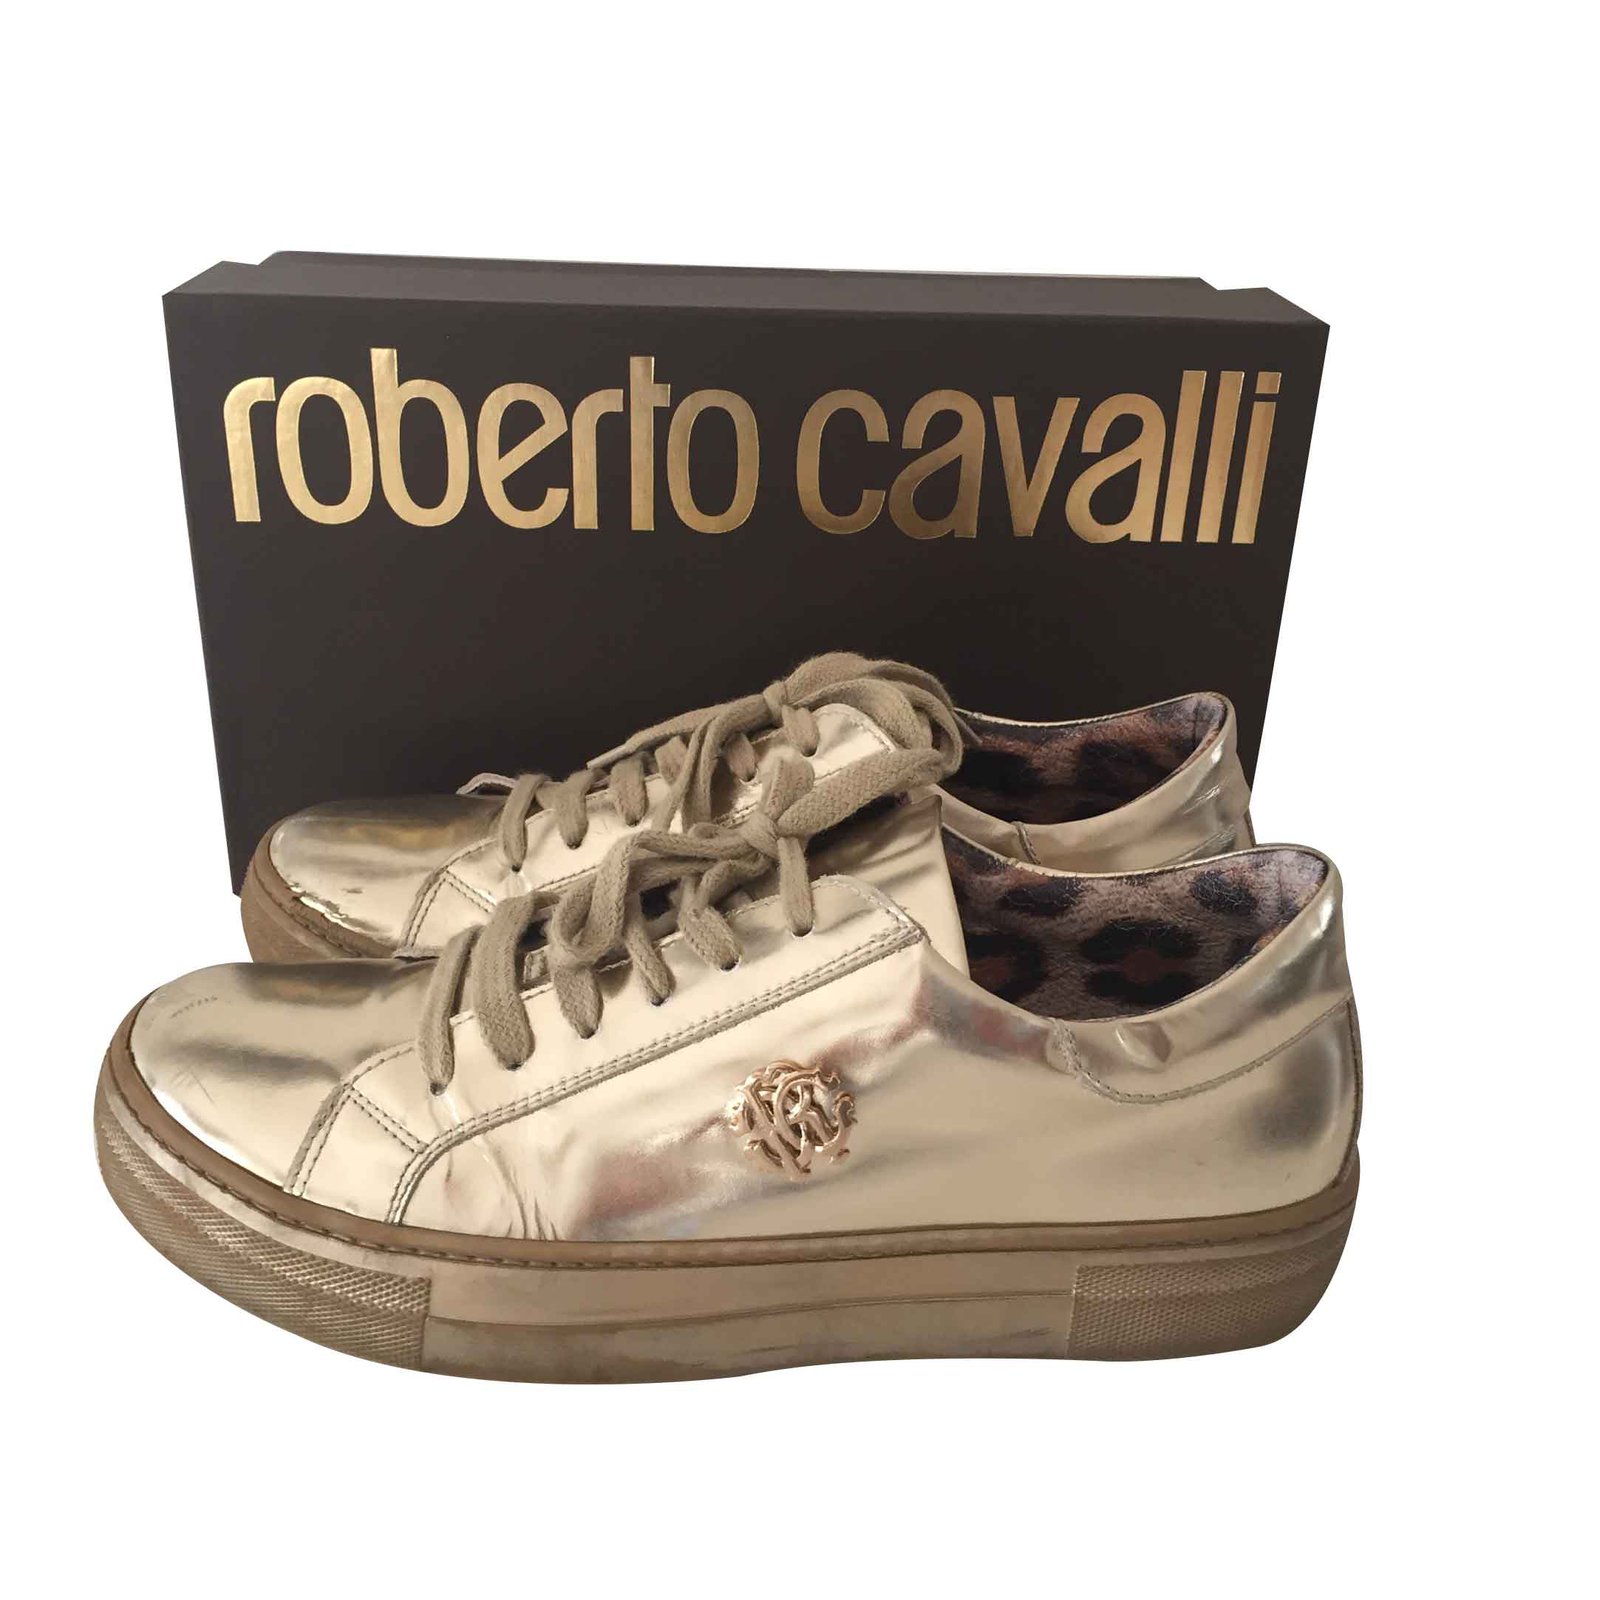 Cavalli обувь. Обувь Роберто Кавалли мужские 7735. Roberto Cavalli Sneakers. Кроссовки Роберто Кавалли. Обувь Roberto Cavalli class Sport!.